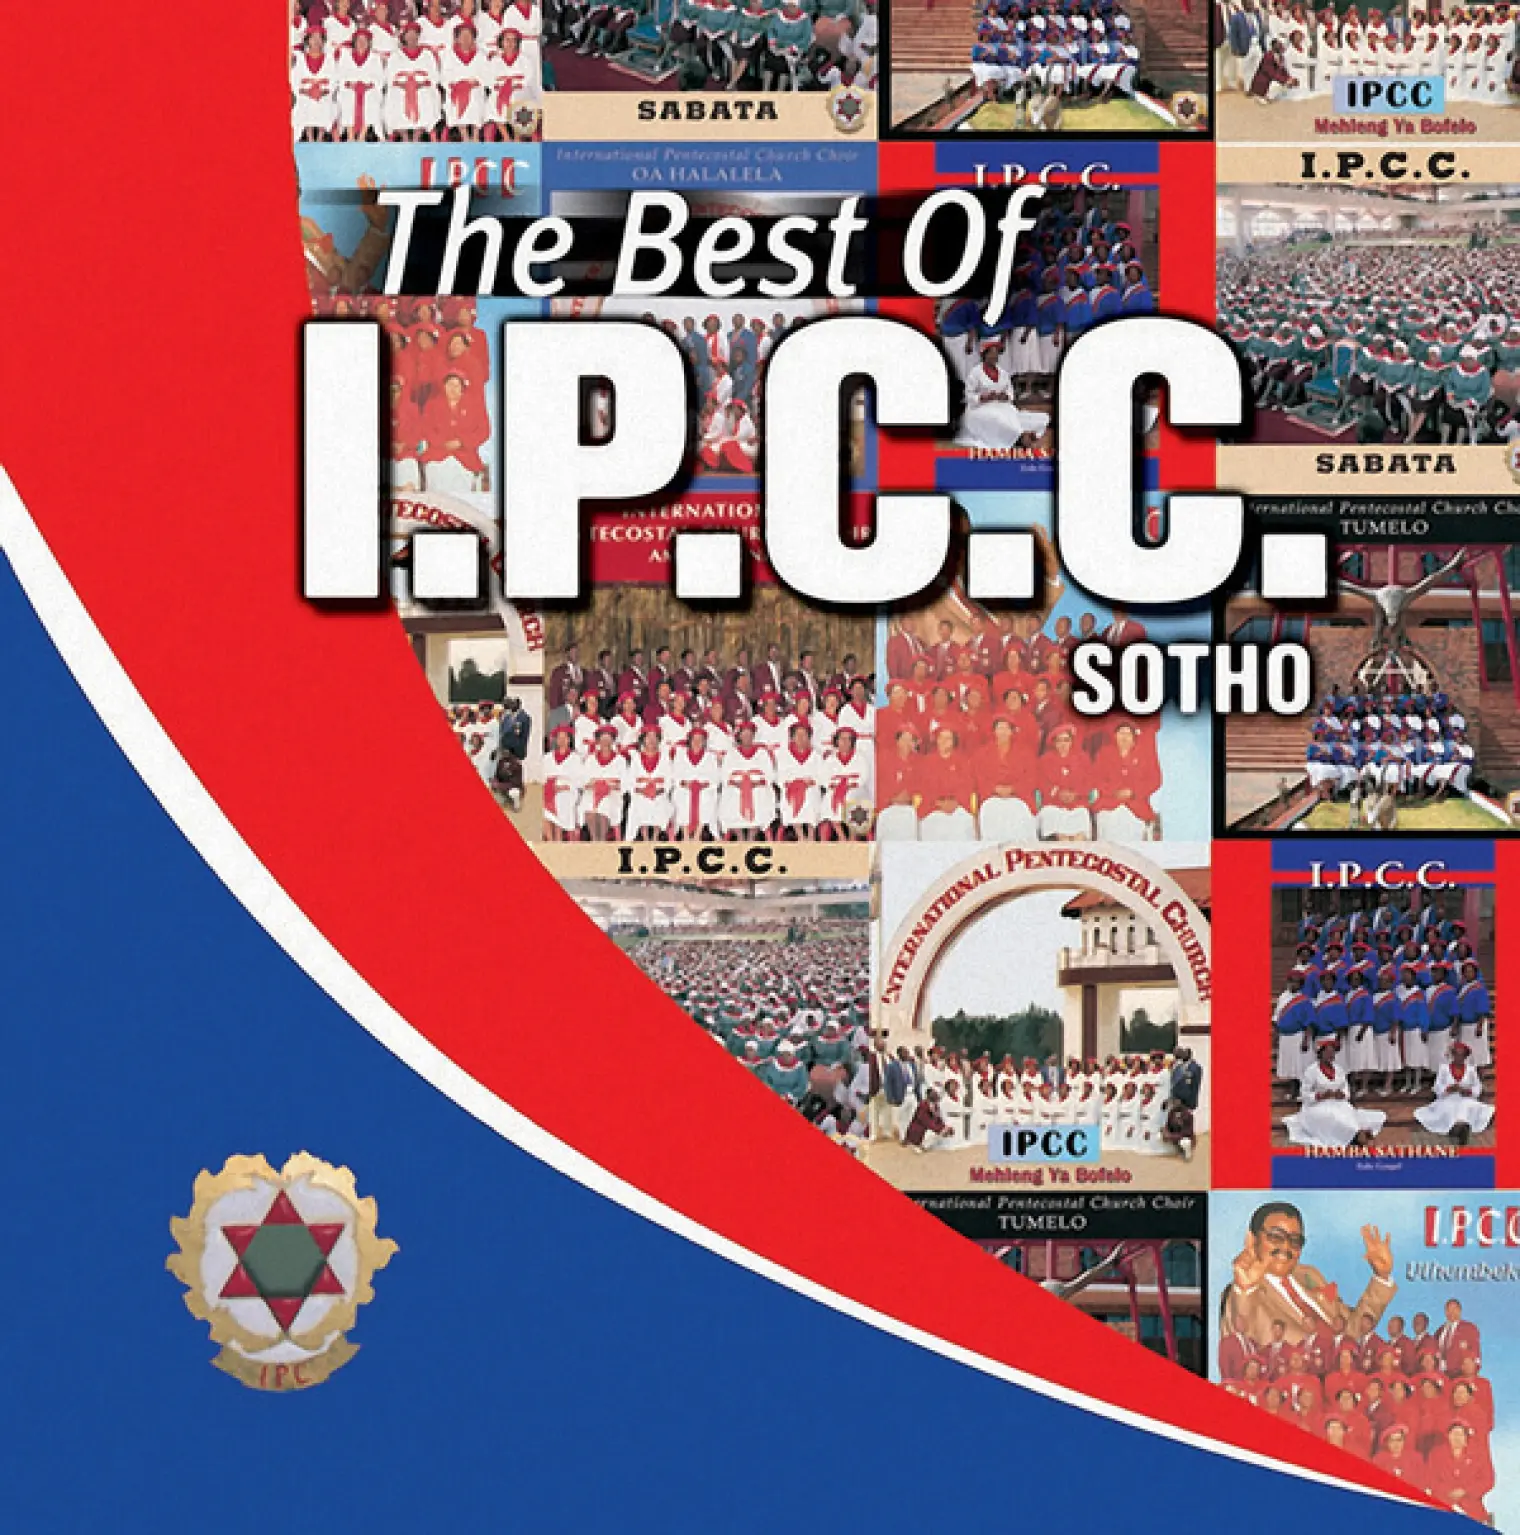 The Best of (Sotho) -  I.P.C.C. 